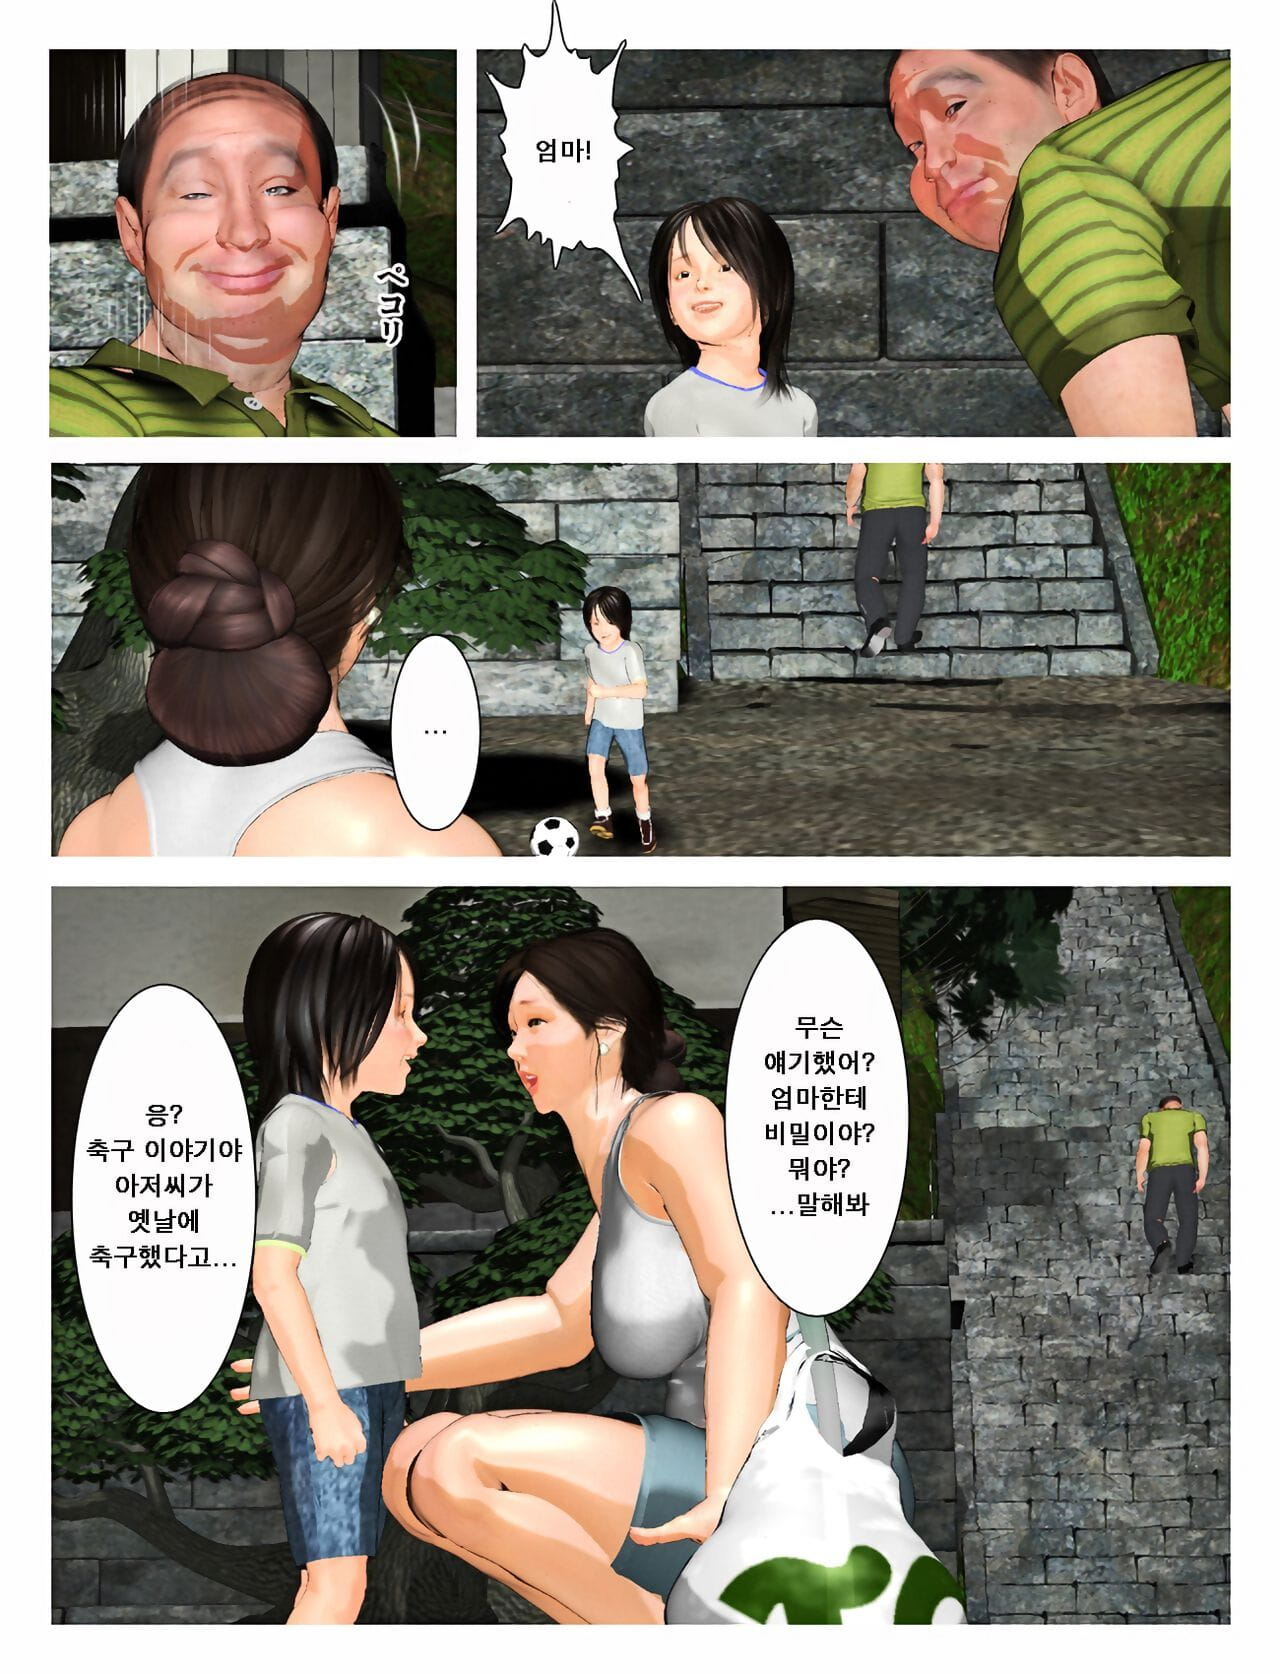 kyou geen misako san 2019:2 오늘의 미사코씨 2019:2 page 1